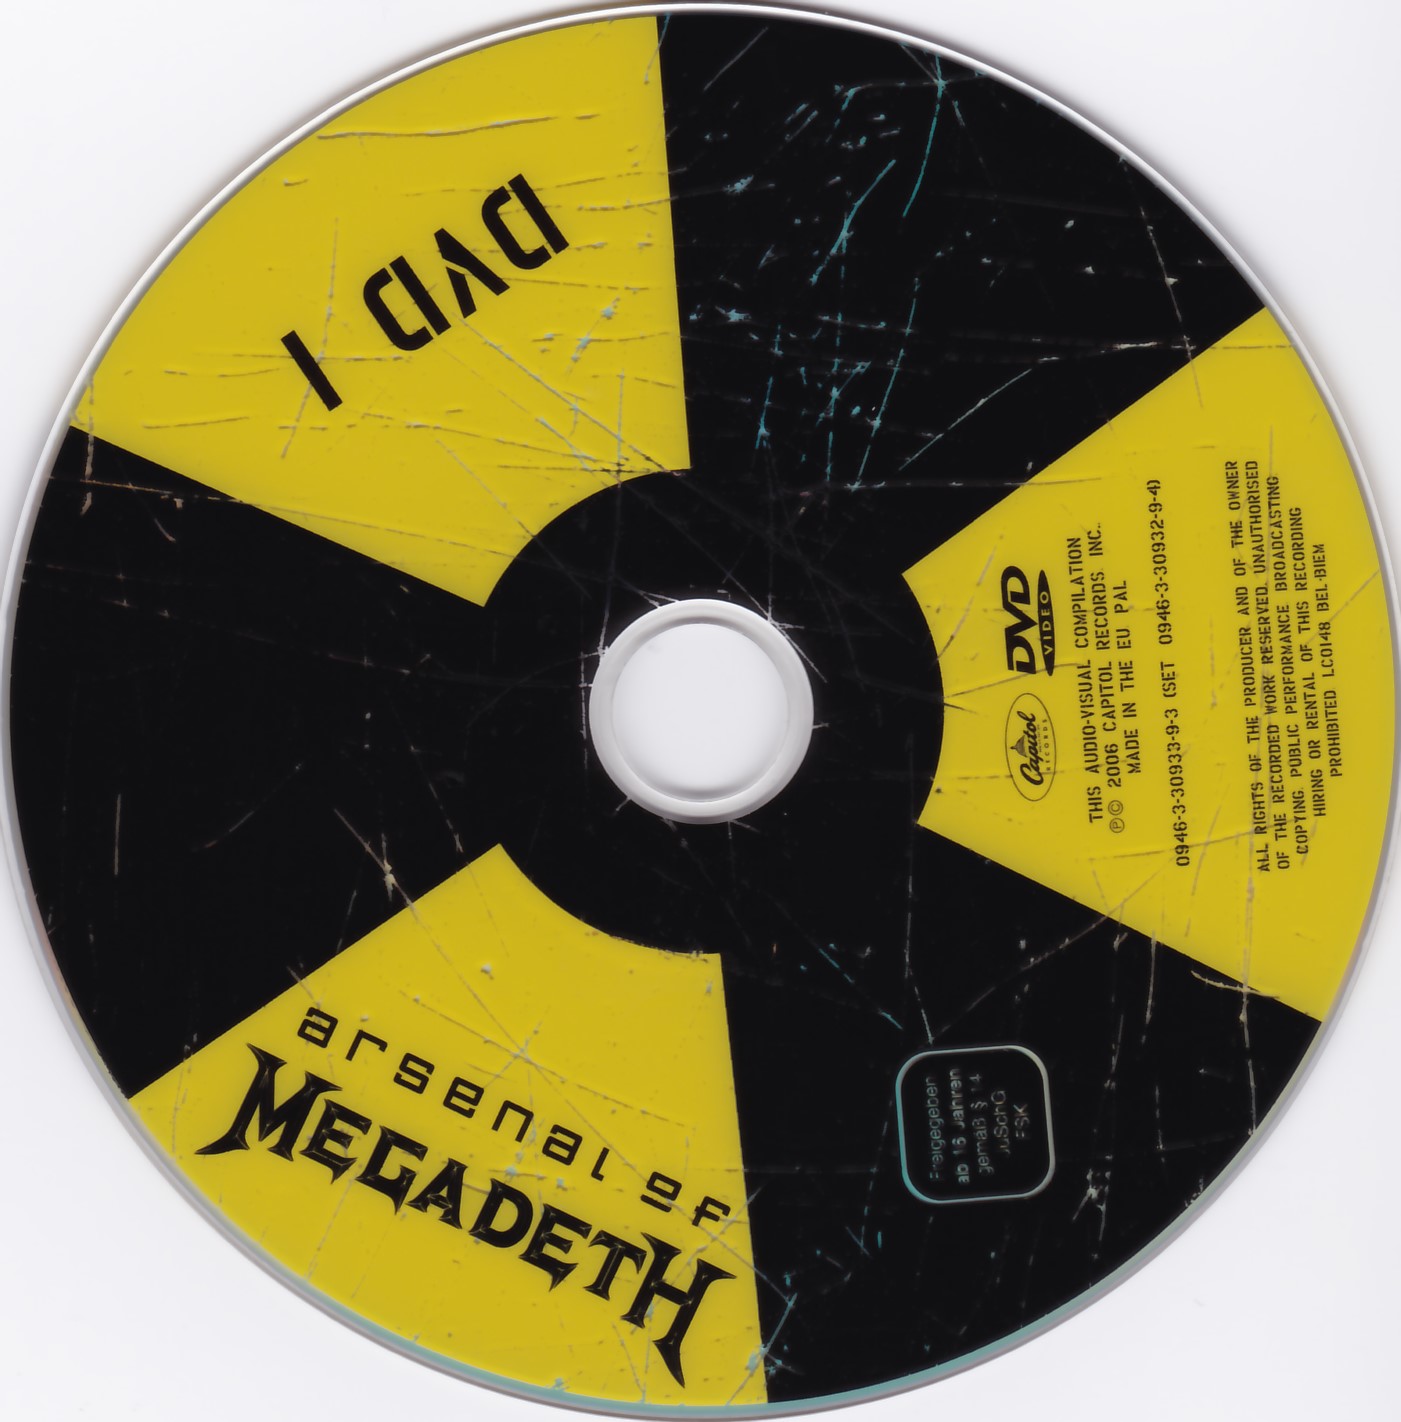 Arsenal of Megadeth DVD 1 